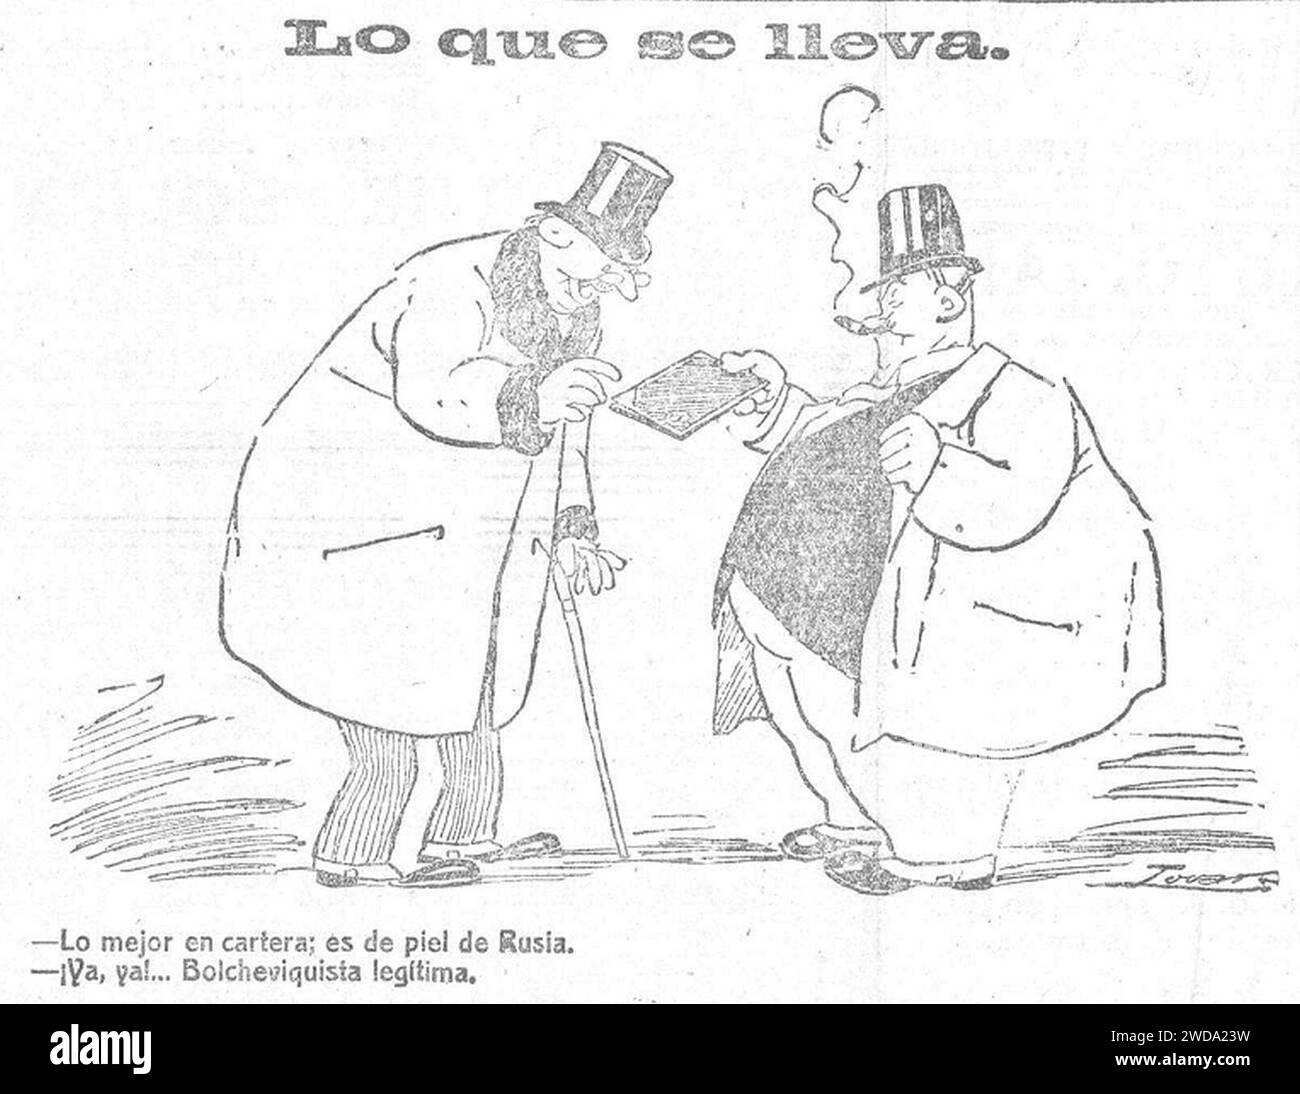 06.01.1919, Heraldo de Madrid, Lo que se lleva, Tovar. Stockfoto